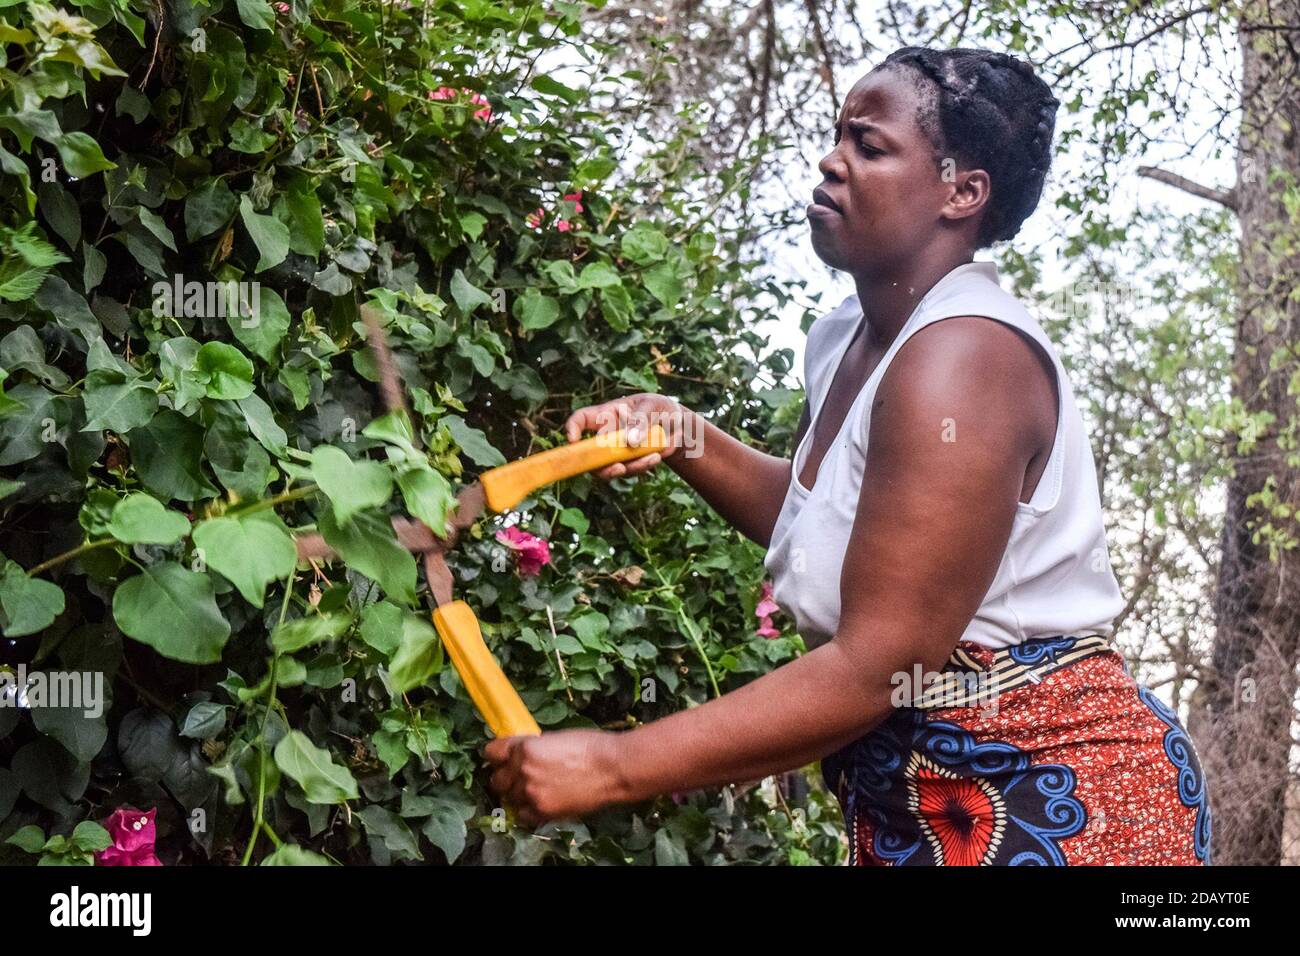 Busisiwe Sibanda prunes trees in her employer’s yard in Eloana, an area in Bulawayo, Zimbabwe. Stock Photo